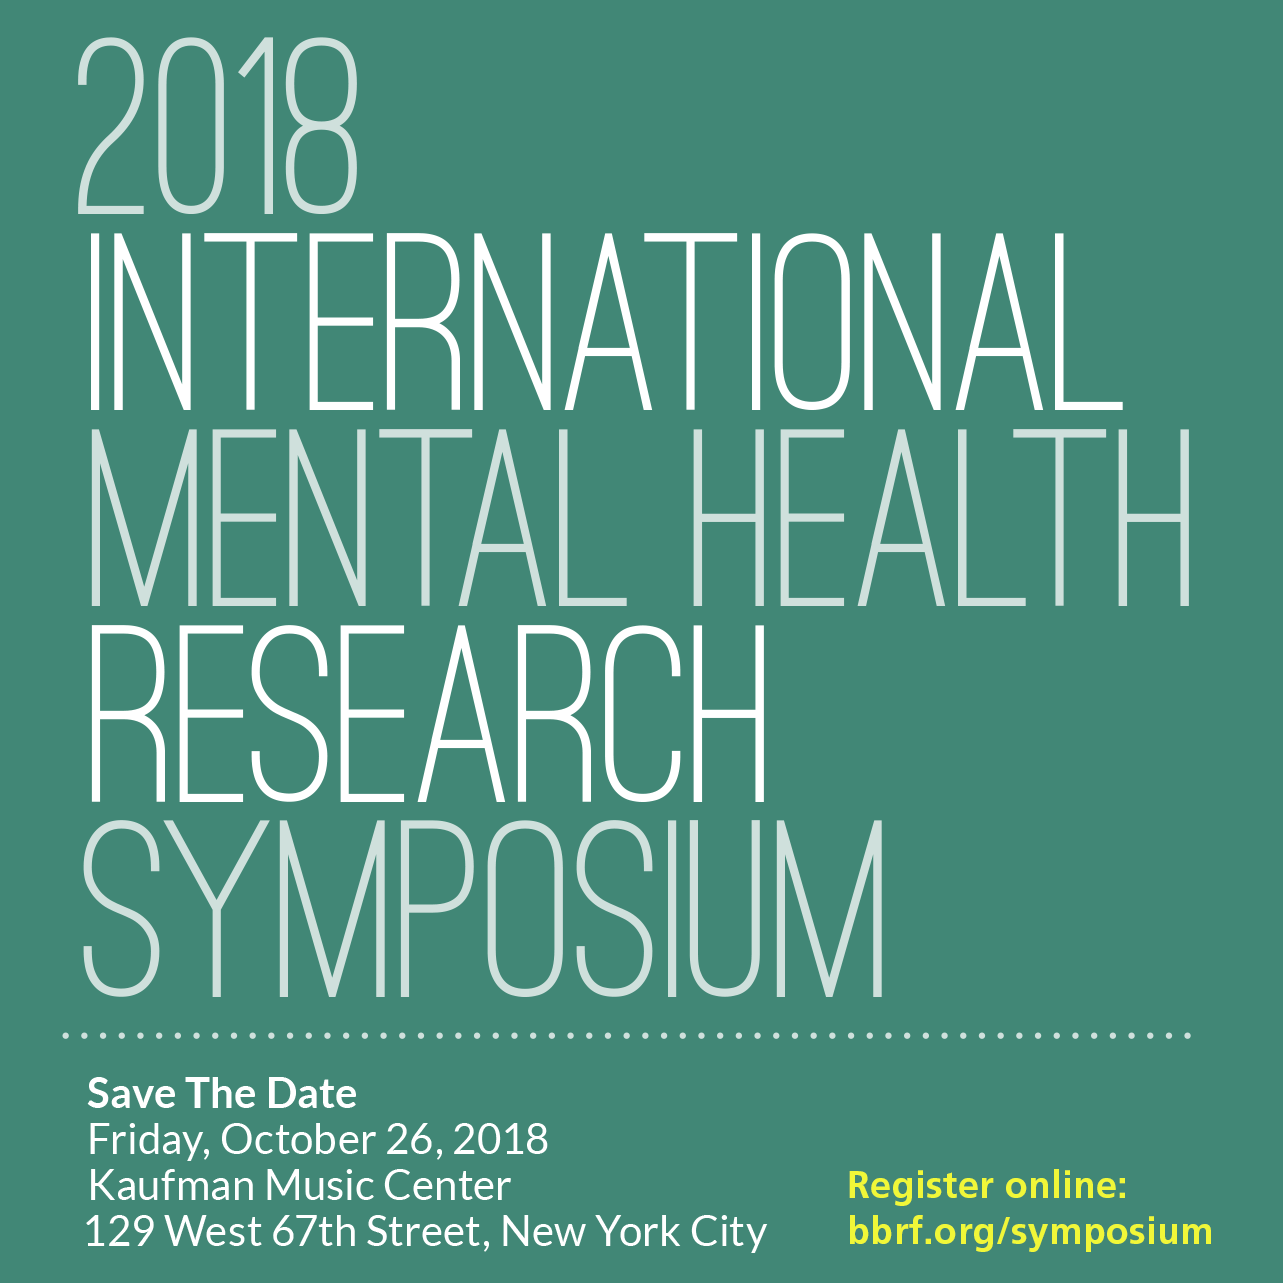 2018 International Mental Health Research Symposium
